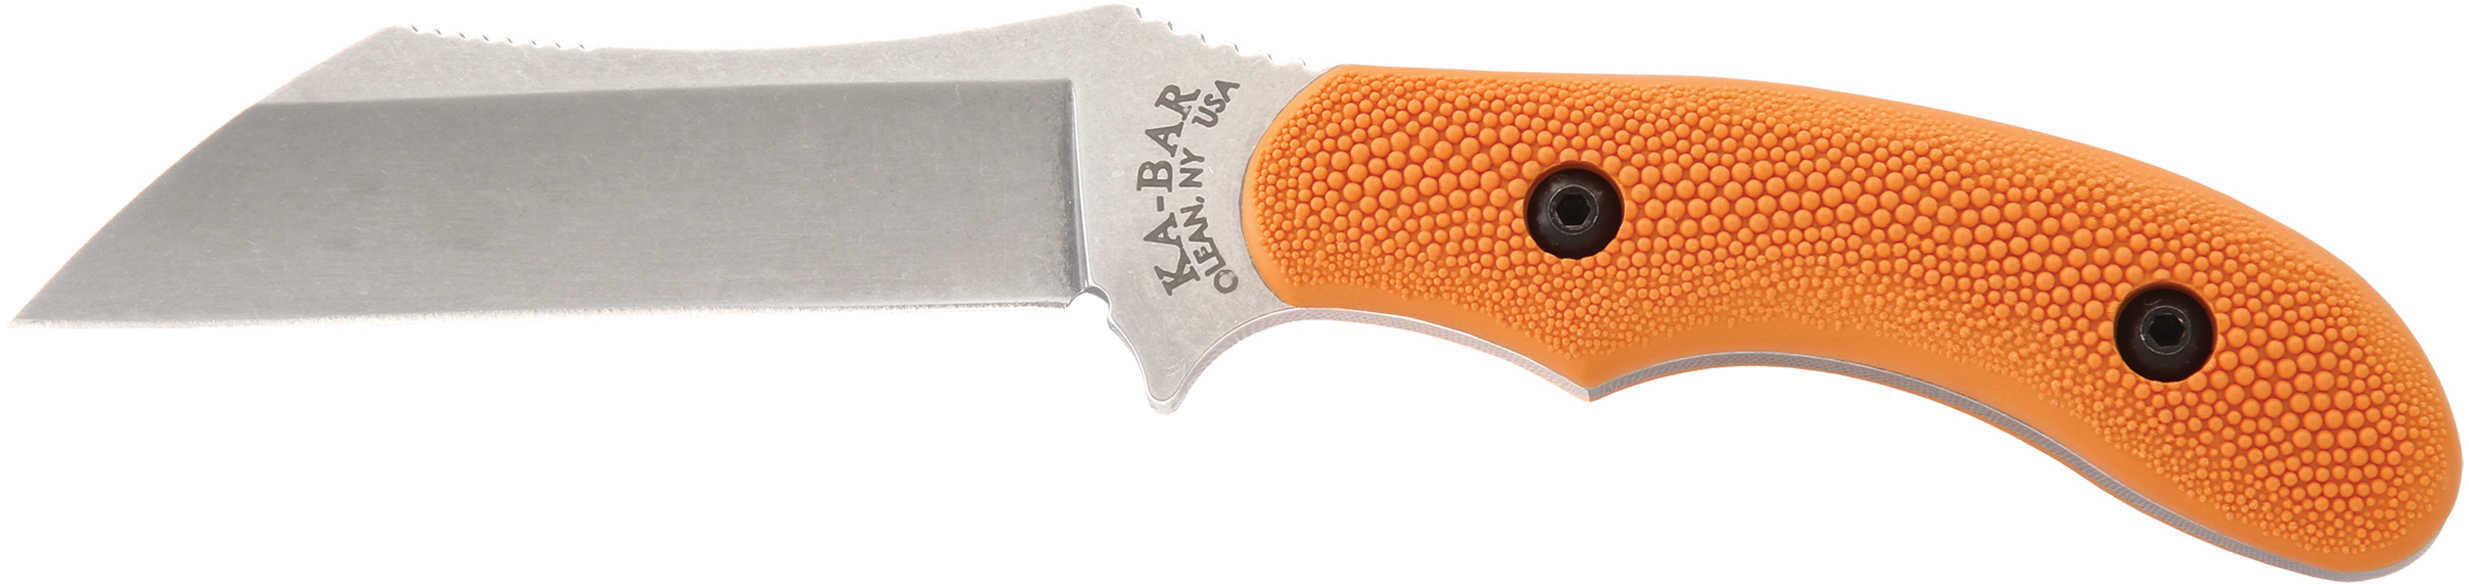 Ka-Bar Johnson Adventure Knife Wharnstalker Md: 2-5604-2